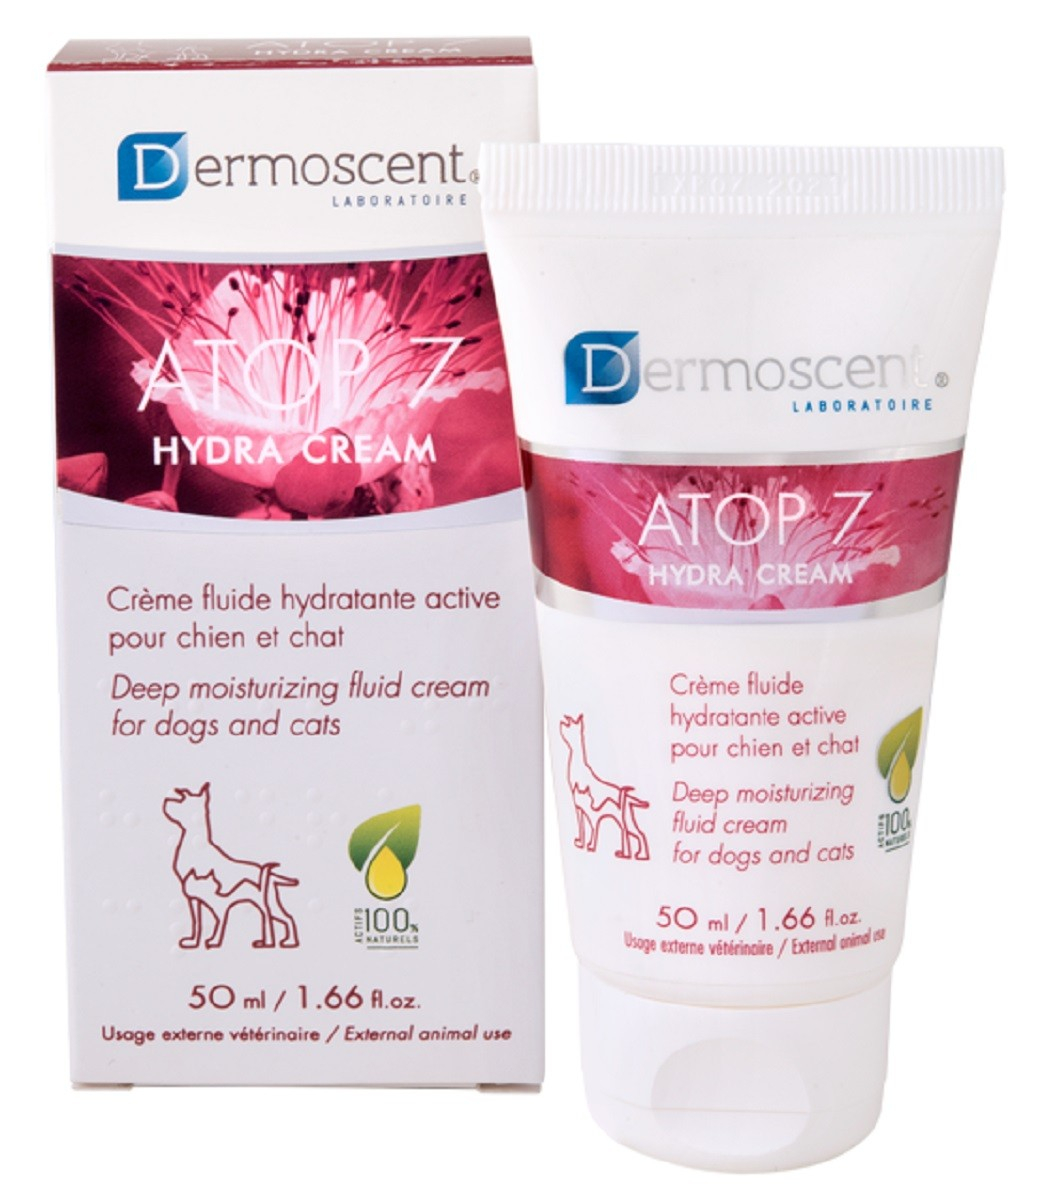  Dermoscent ATOP 7 Hydra Cream crema fluida hidratante activa